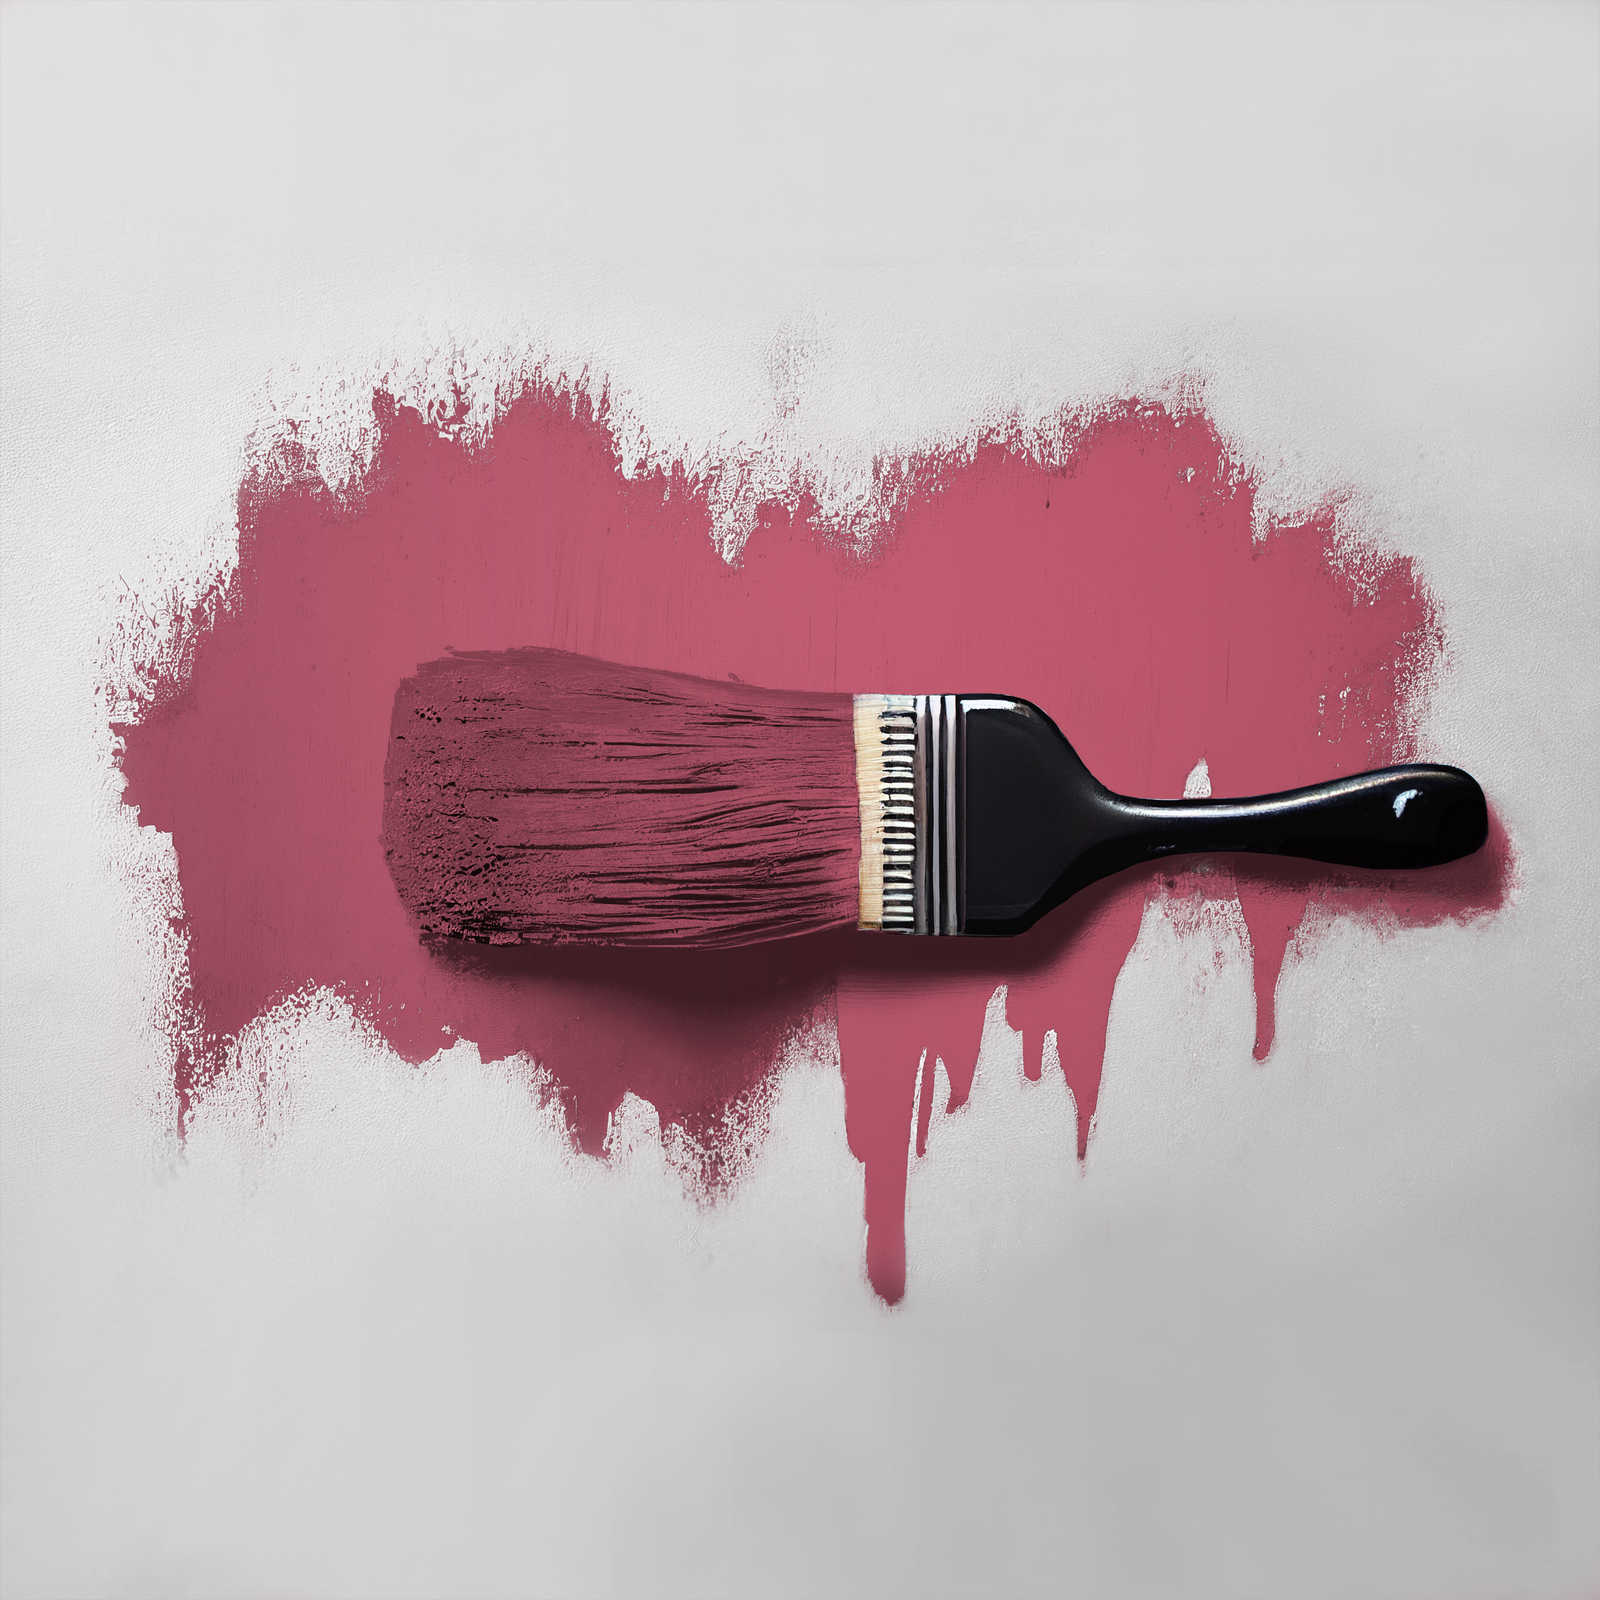             Peinture murale TCK7011 »Rosy Raspberry« en rose foncé intense – 5,0 litres
        